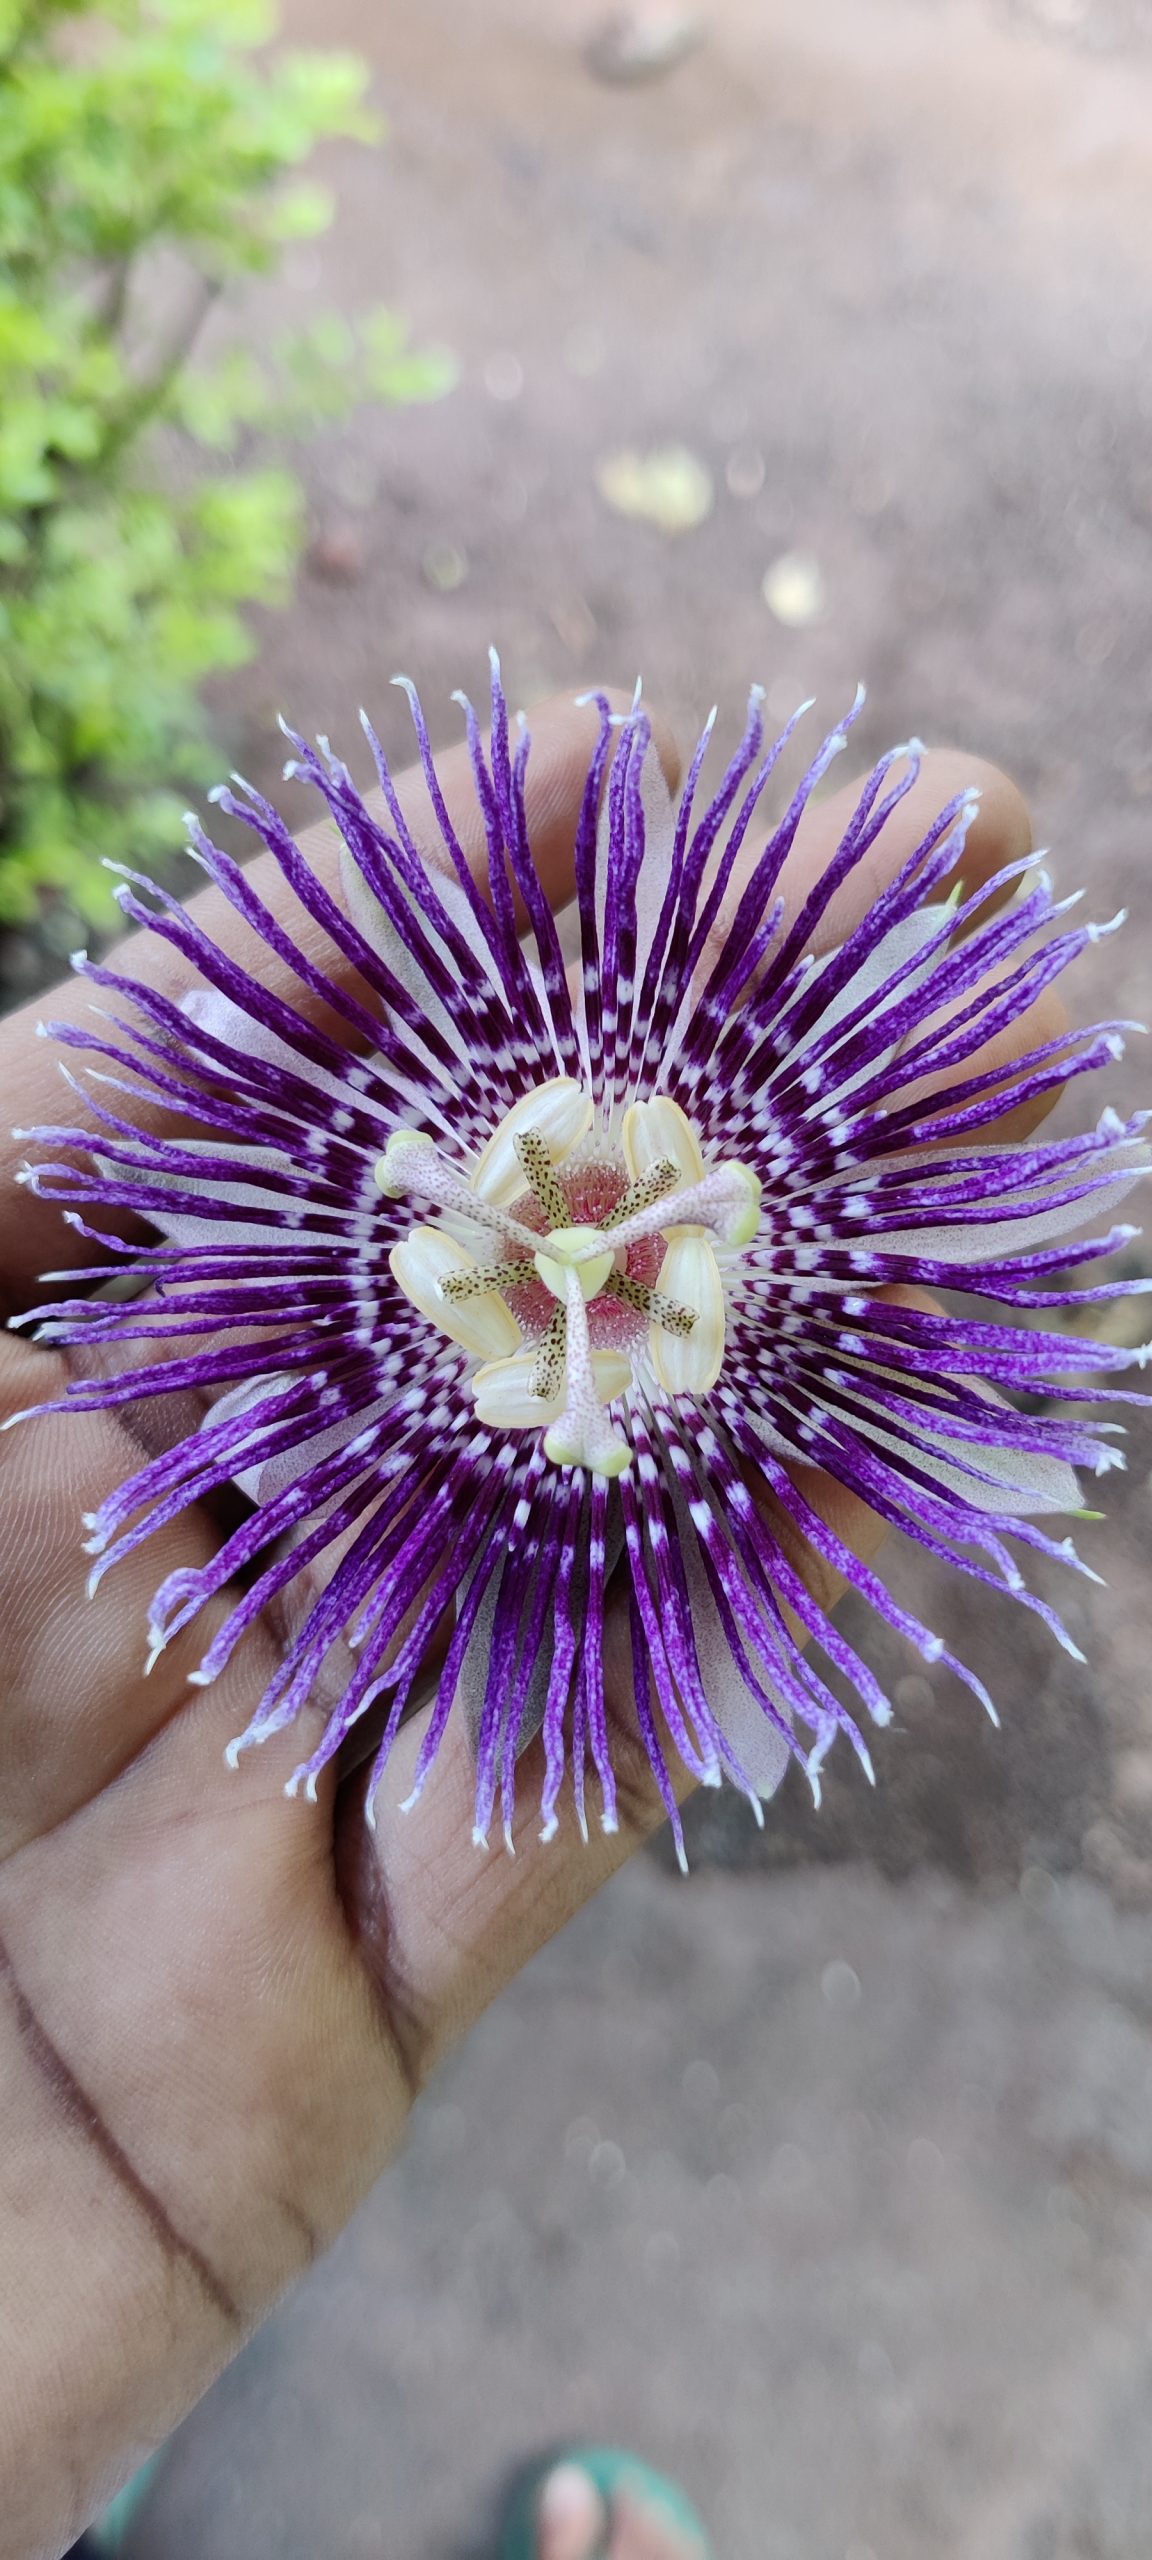 Maracuja Flower Close-up